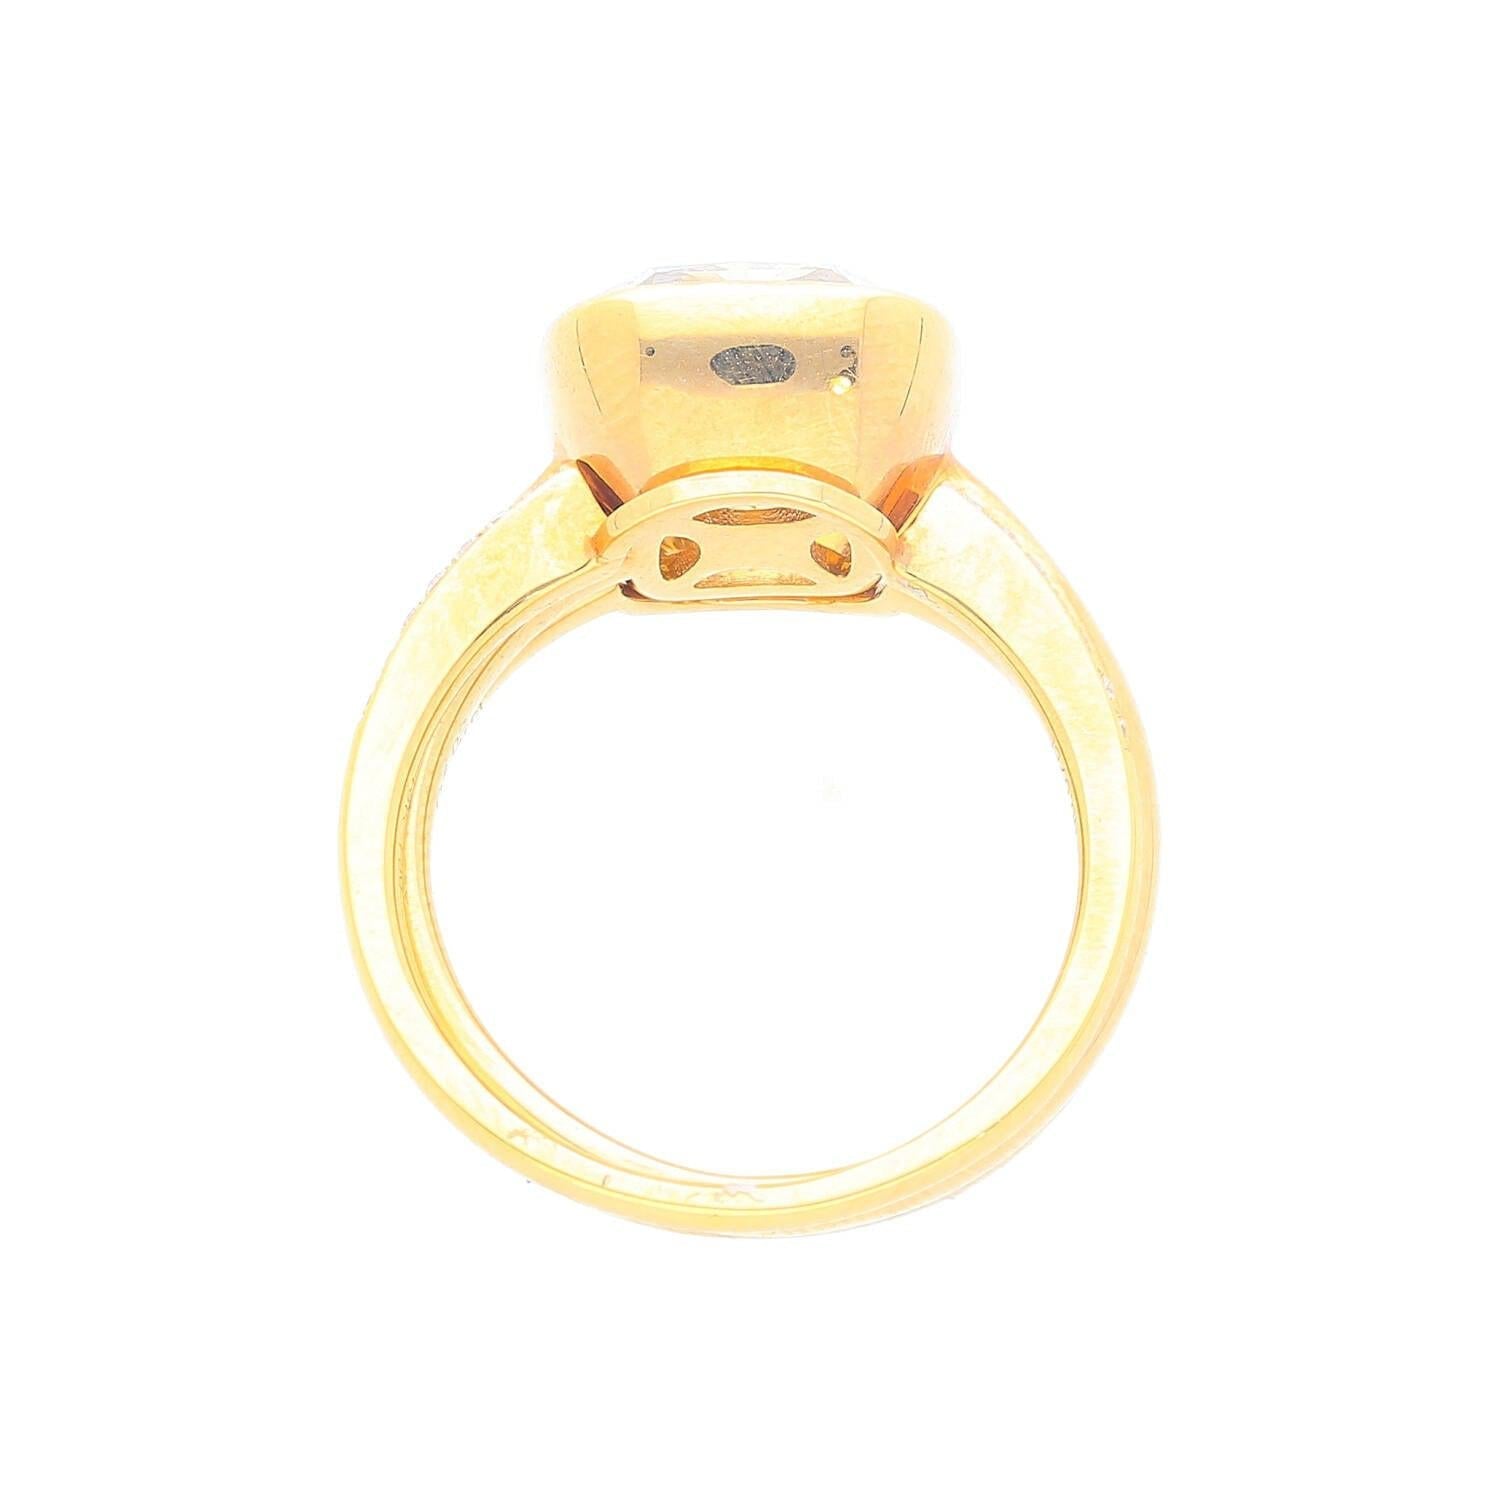 GIA Certified 5.02 Carat Cushion Cut Fancy Brown Yellow Diamond Ring in 18K Rose Gold & Detachable Bands-Rings-ASSAY